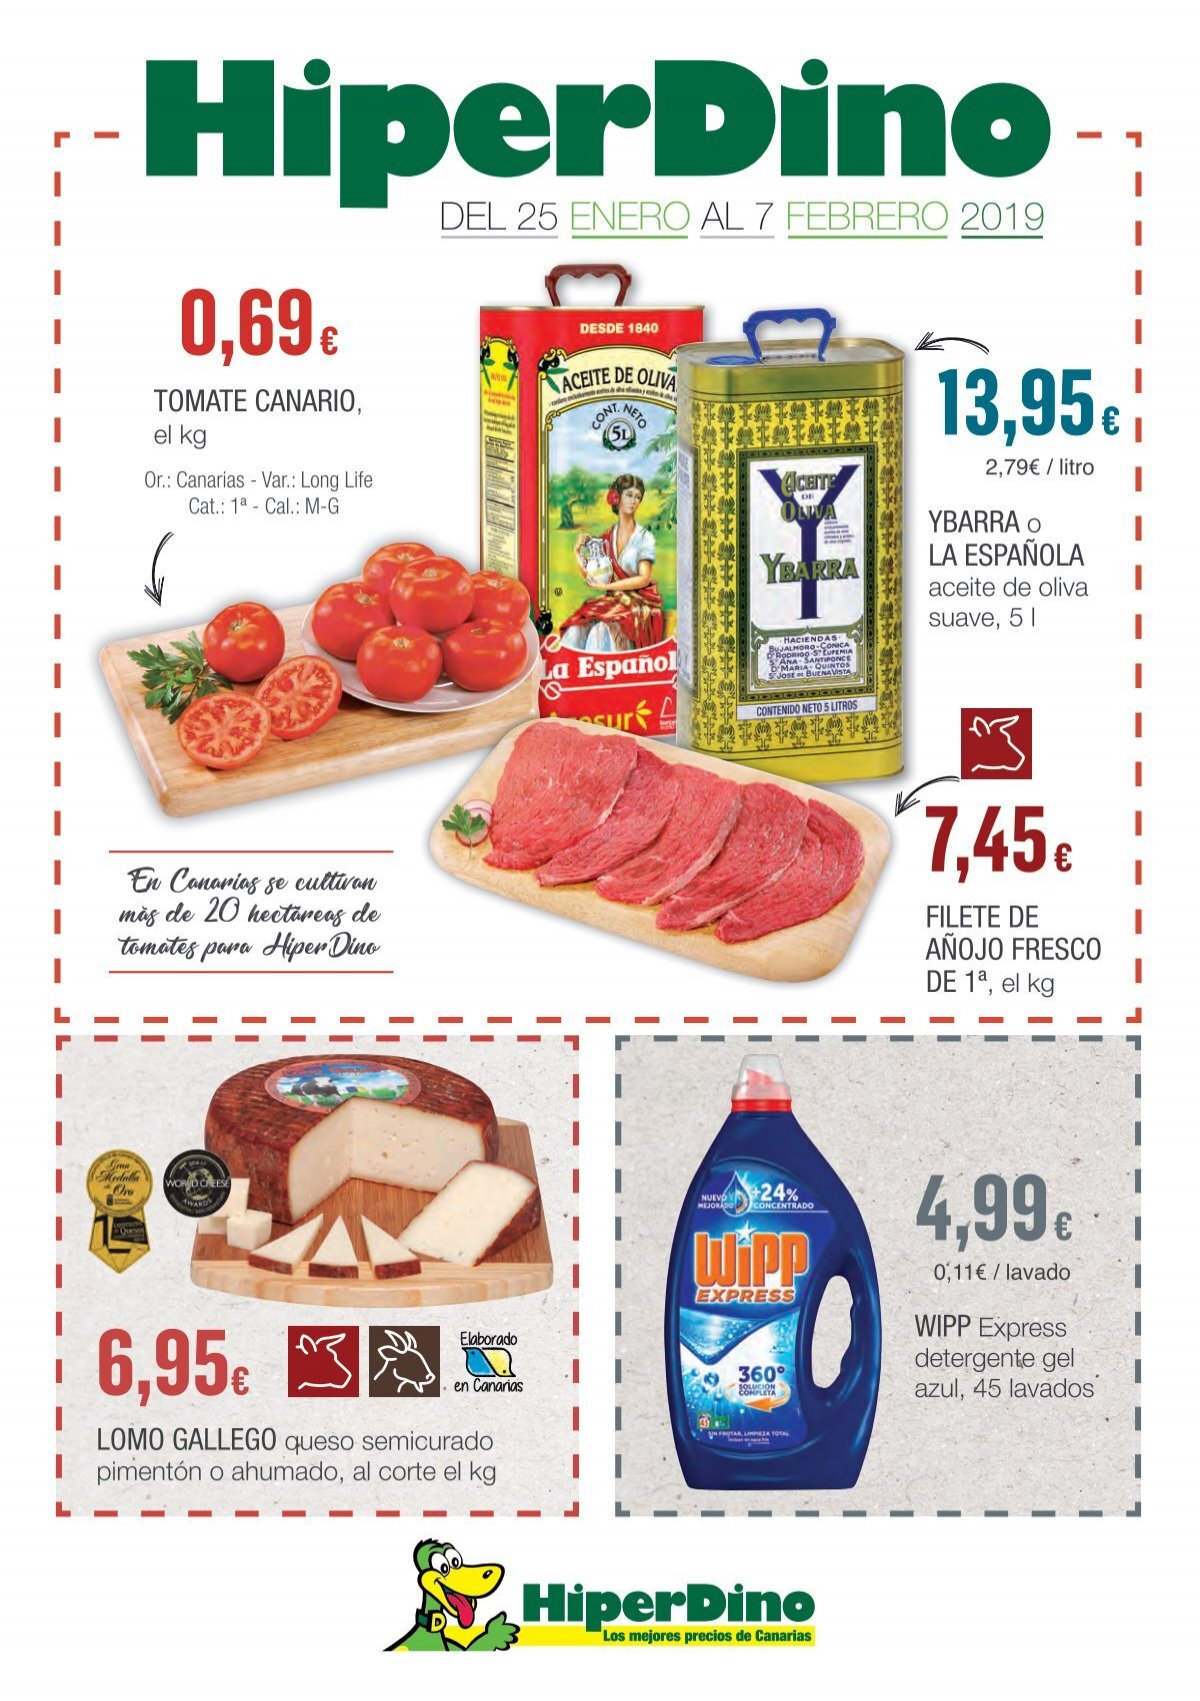 Carne picada Fitness 4,3% grasa Vacuno (19,99 €/kg)